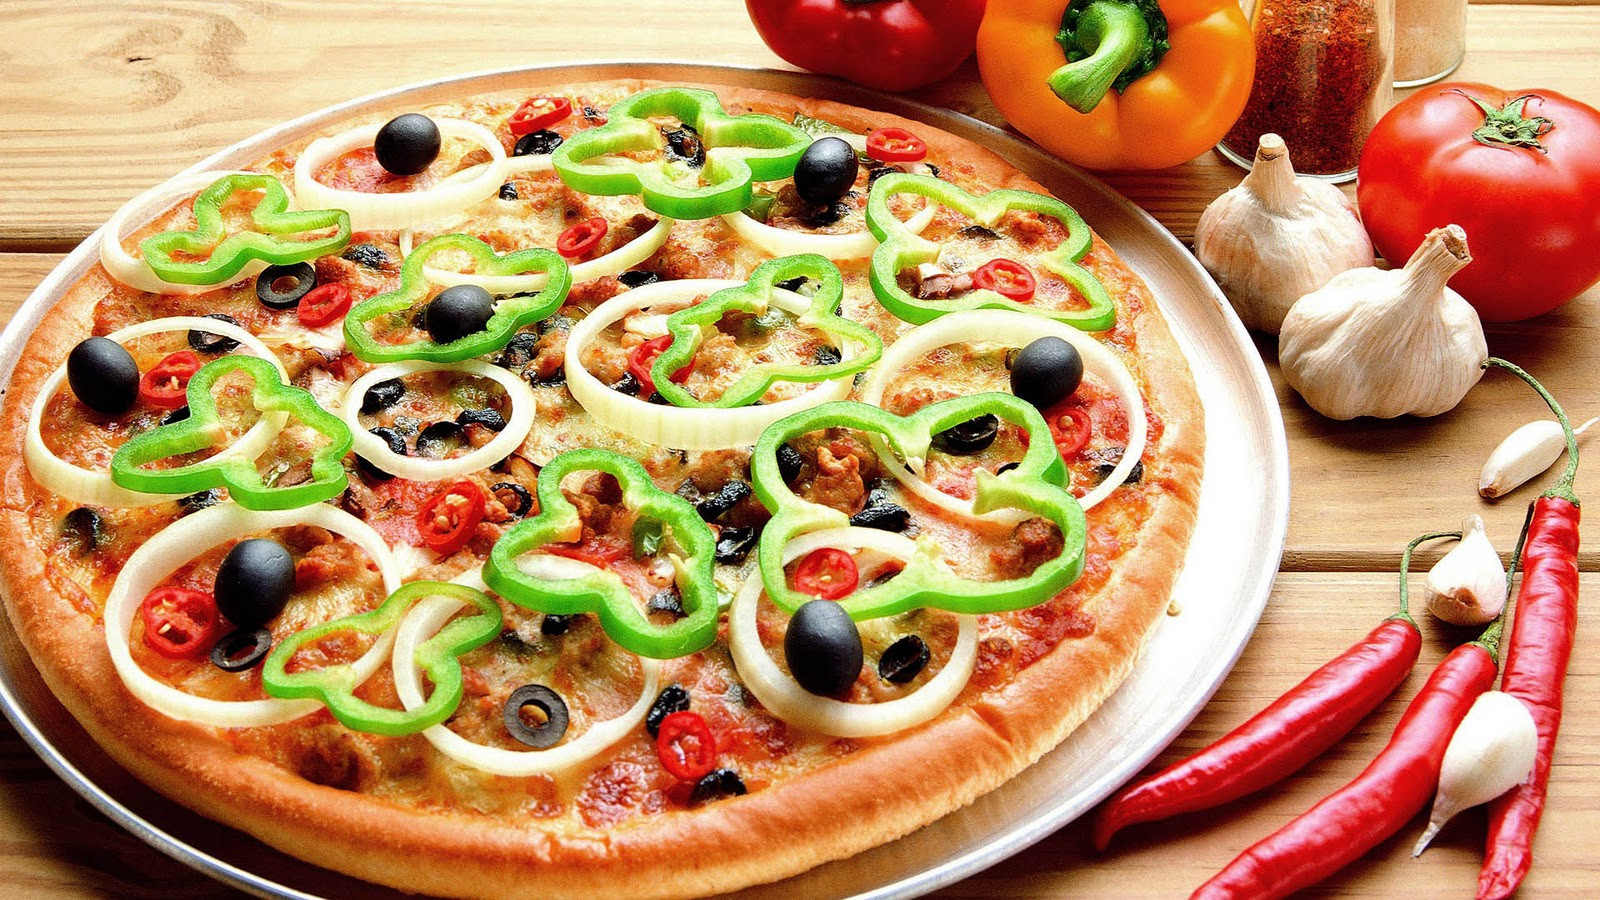 Vegetarian Pizza Recipes
 The Ve arian Pizza Recipe and Preparation Silvio Cicchi